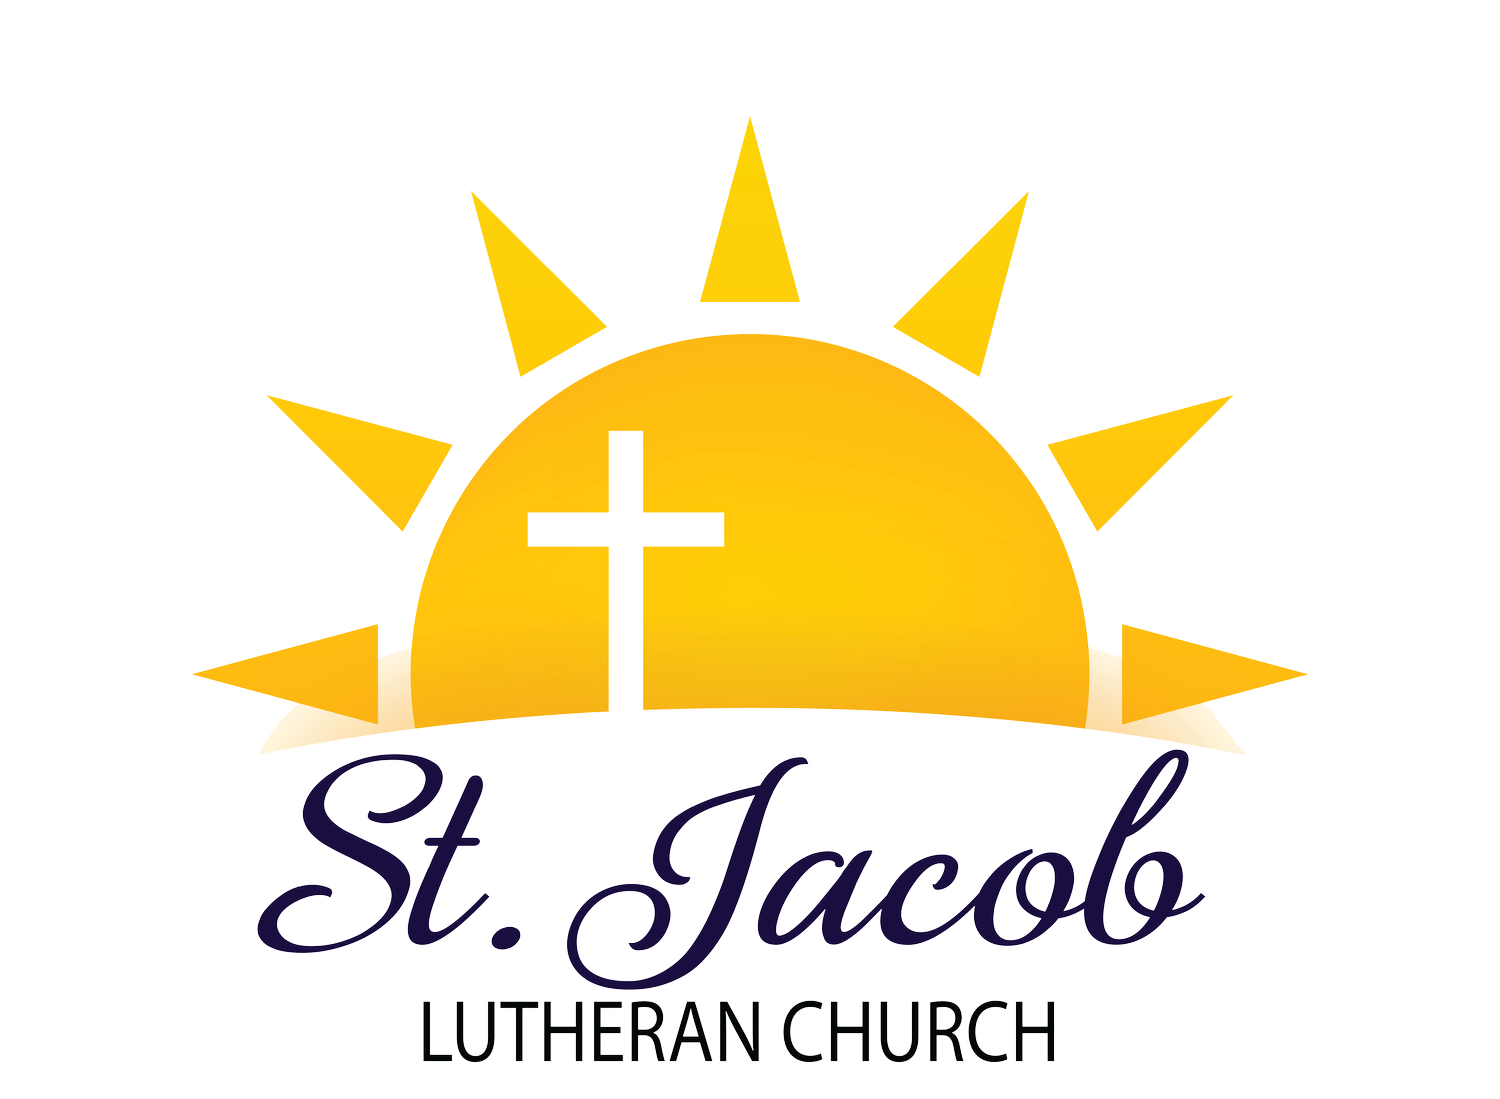 St. Jacob Lutheran Church